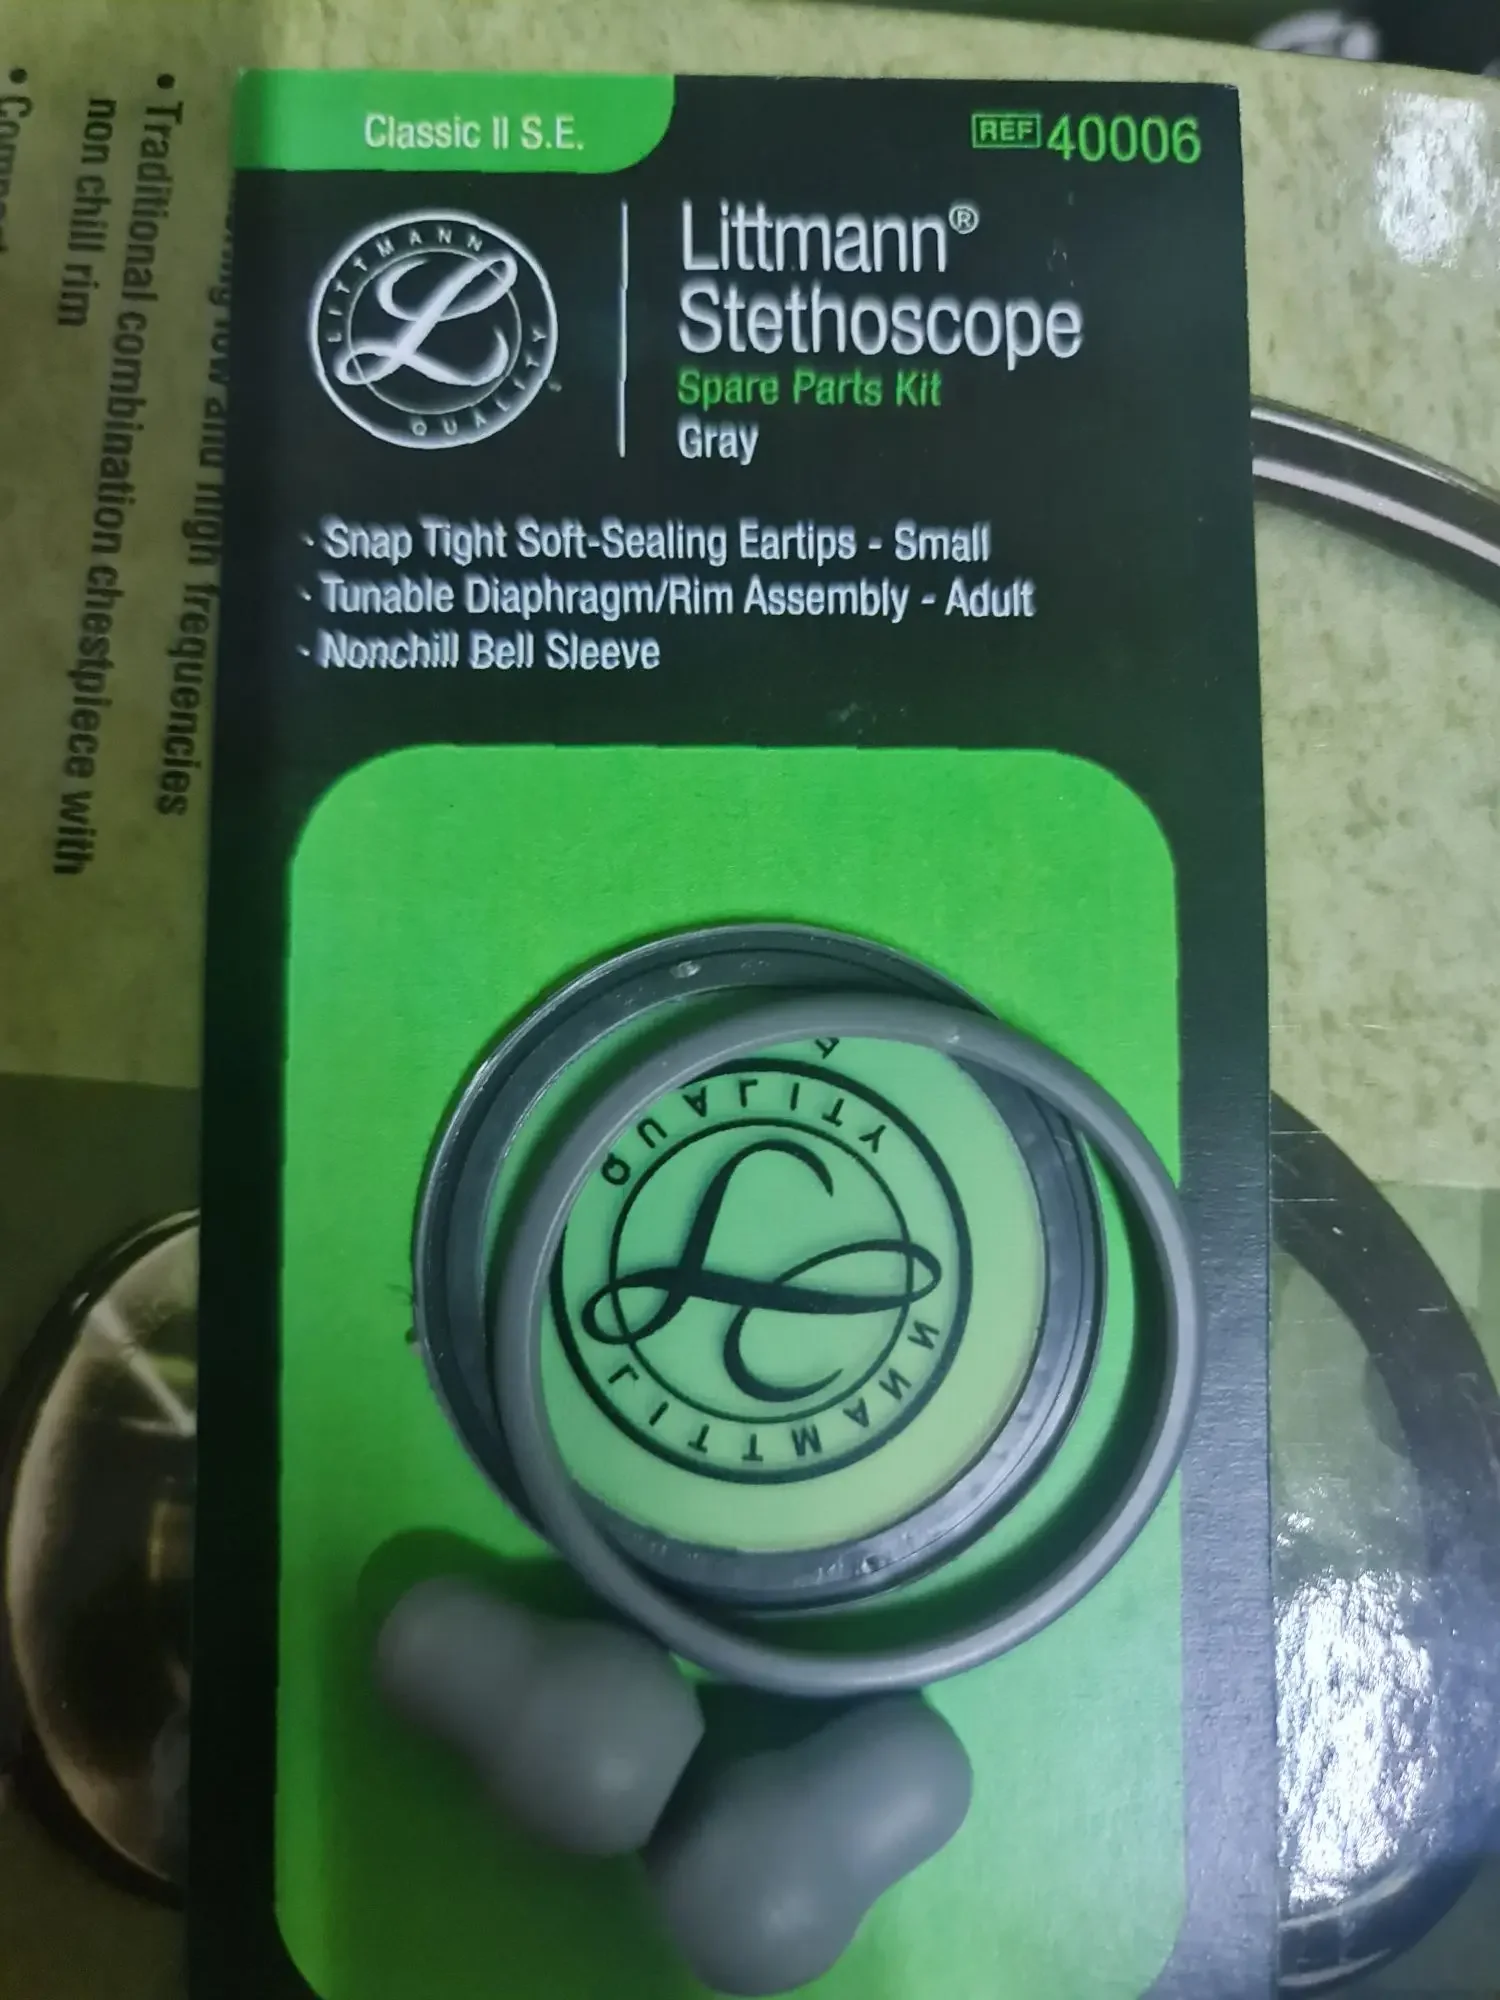 3M Littmann Stethoscope Spare Parts Kit, Classic II S.E., Gray, 40006